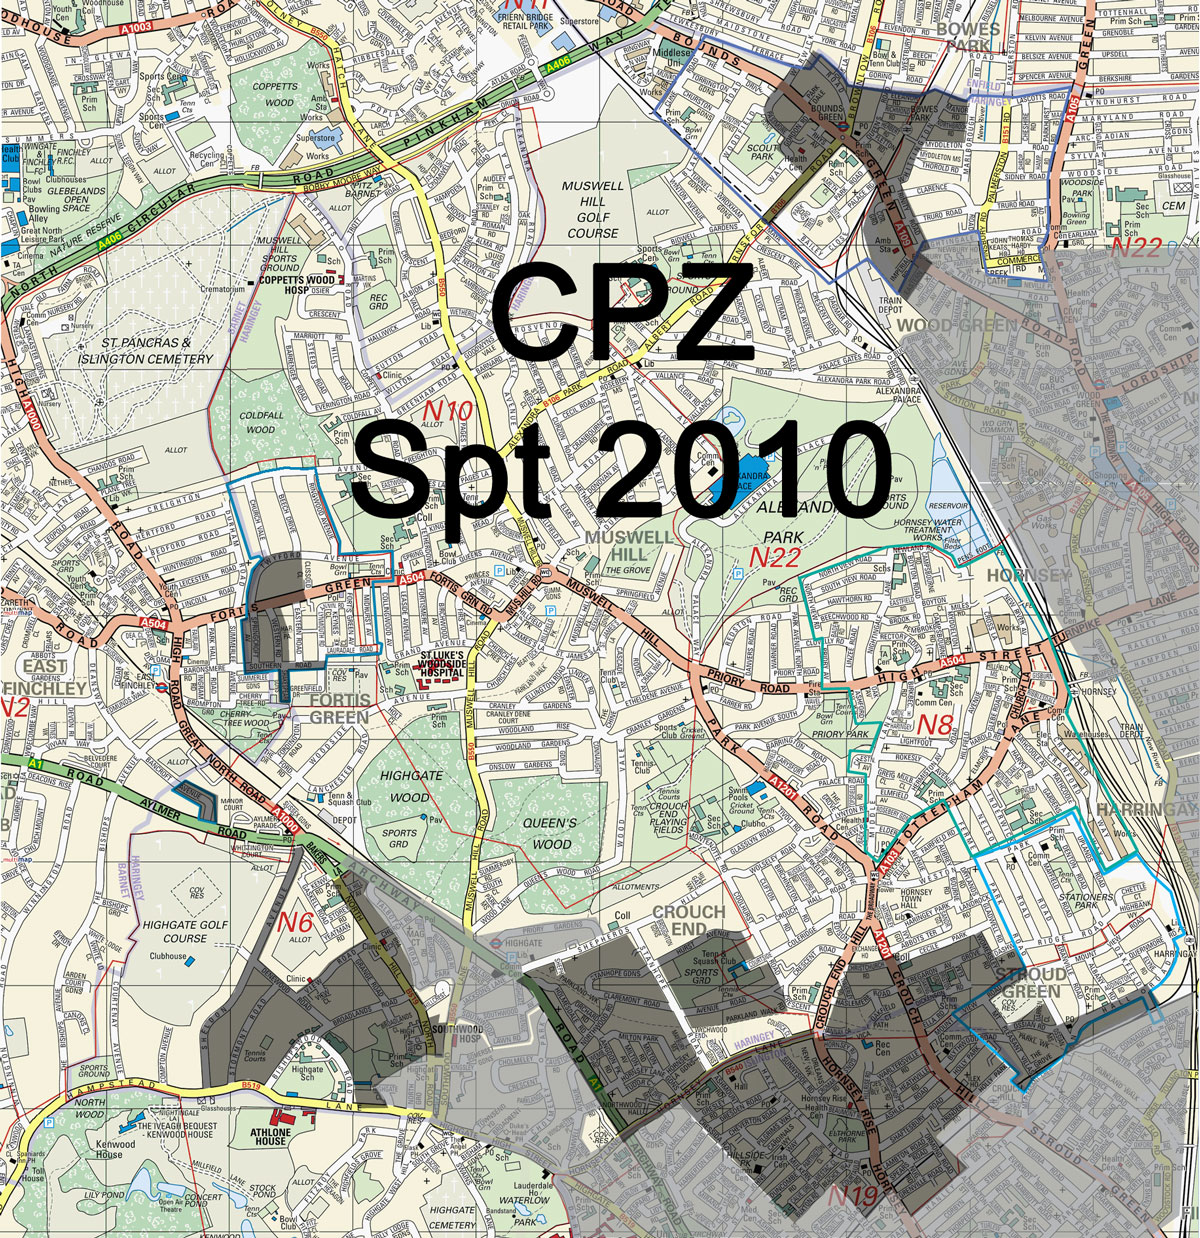 http://greenn8.org/cpz/images/map/cpzmap-after2006-spt2010.jpg